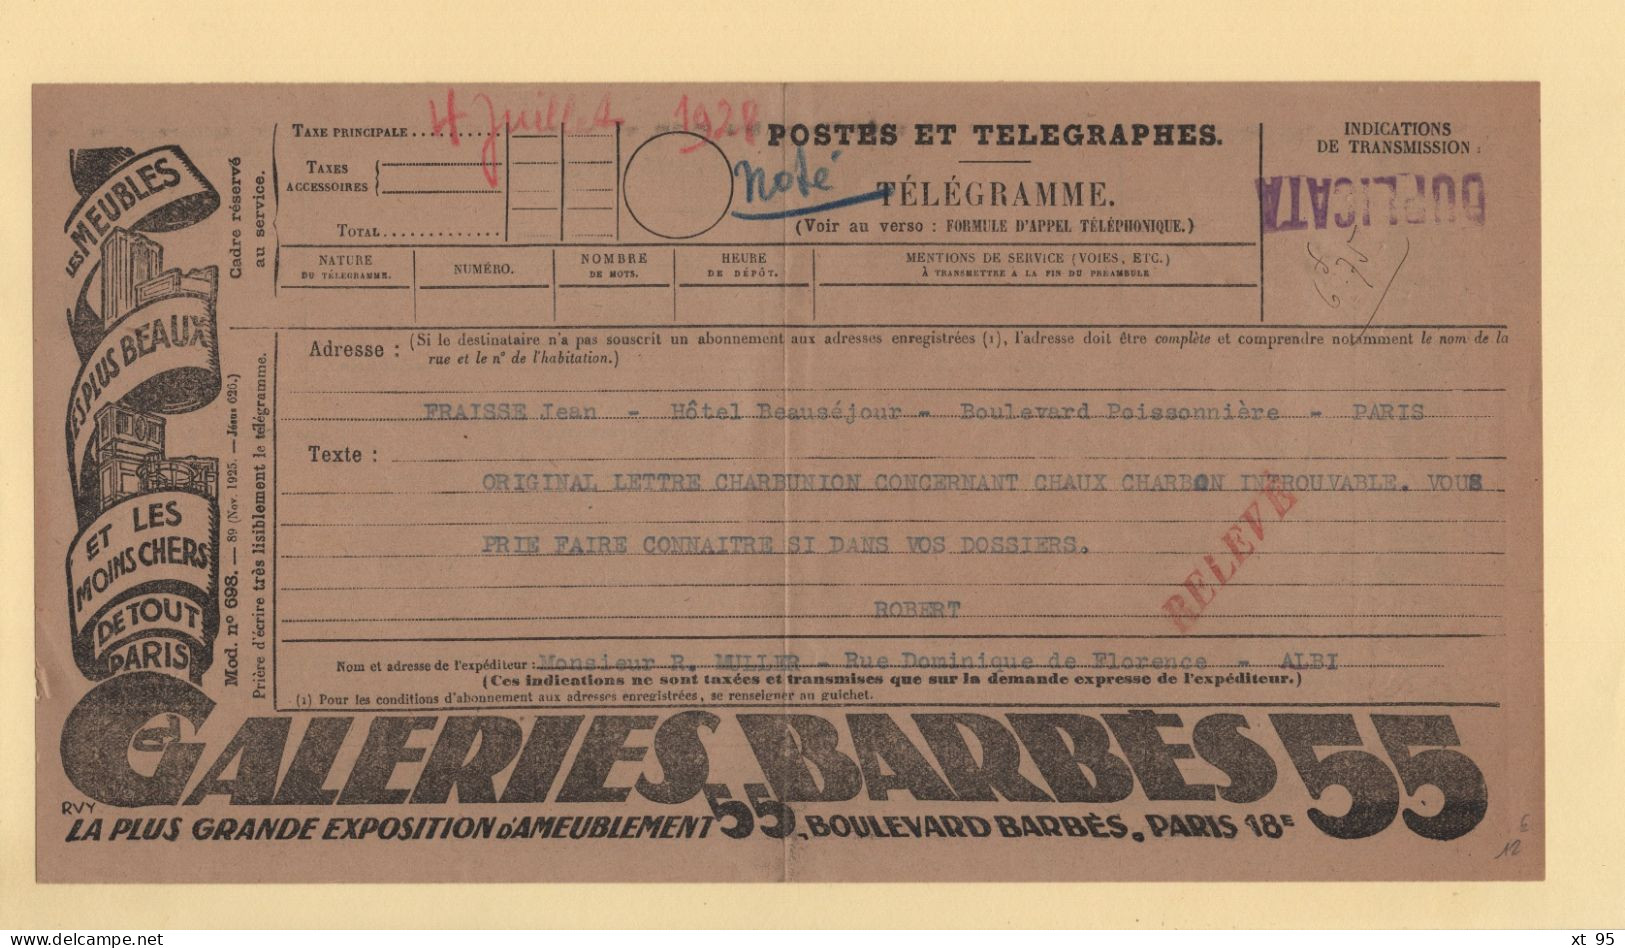 Telegramme Illustre - Galeries Barbes - 1928 - Duplicata - Telegraph And Telephone